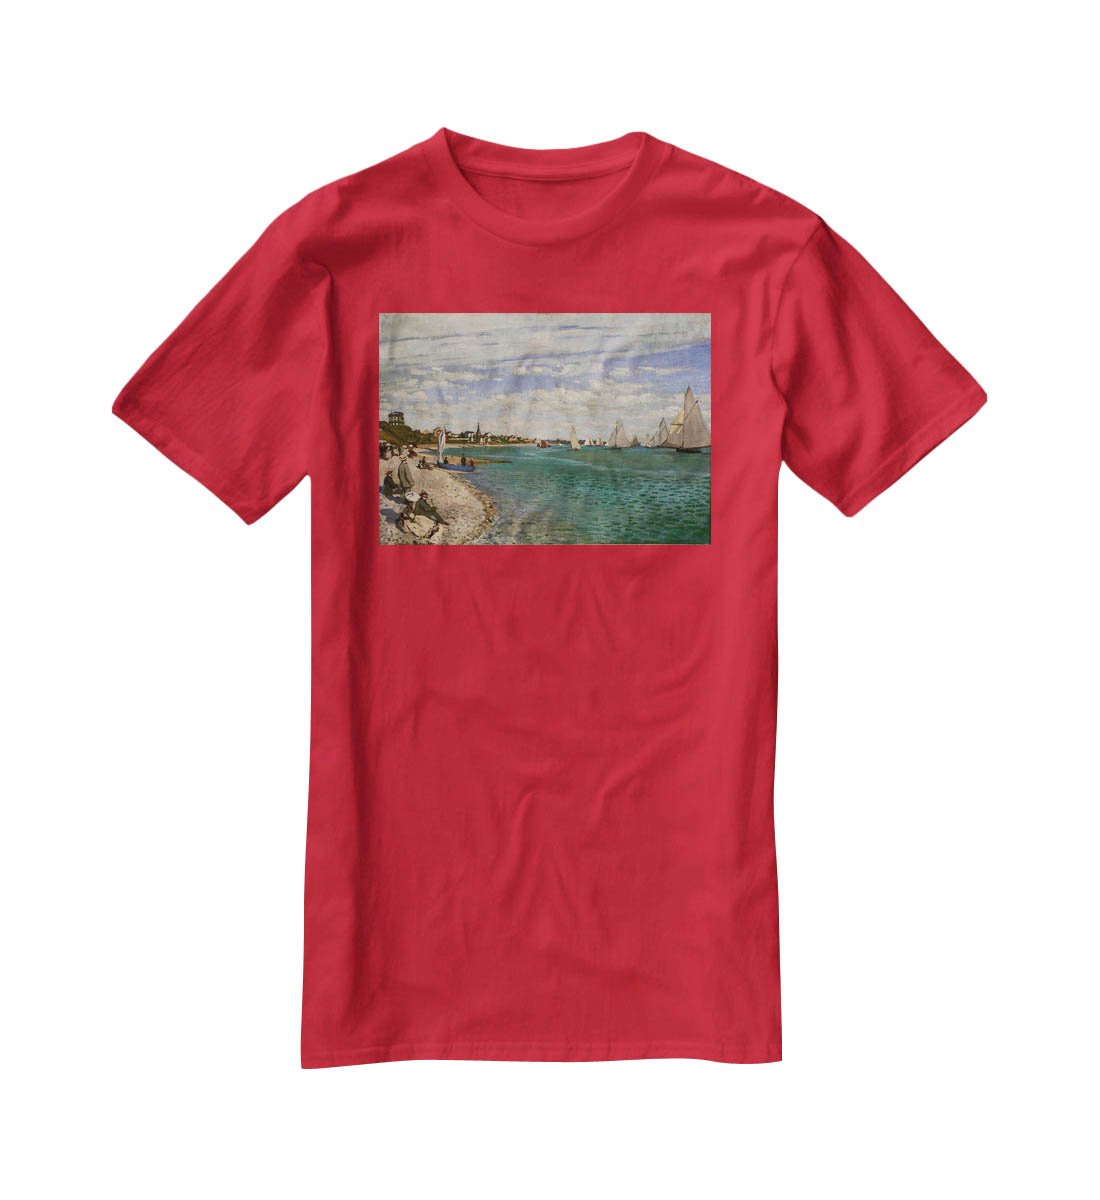 Regatta at St. Adresse by Monet T-Shirt - Canvas Art Rocks - 4